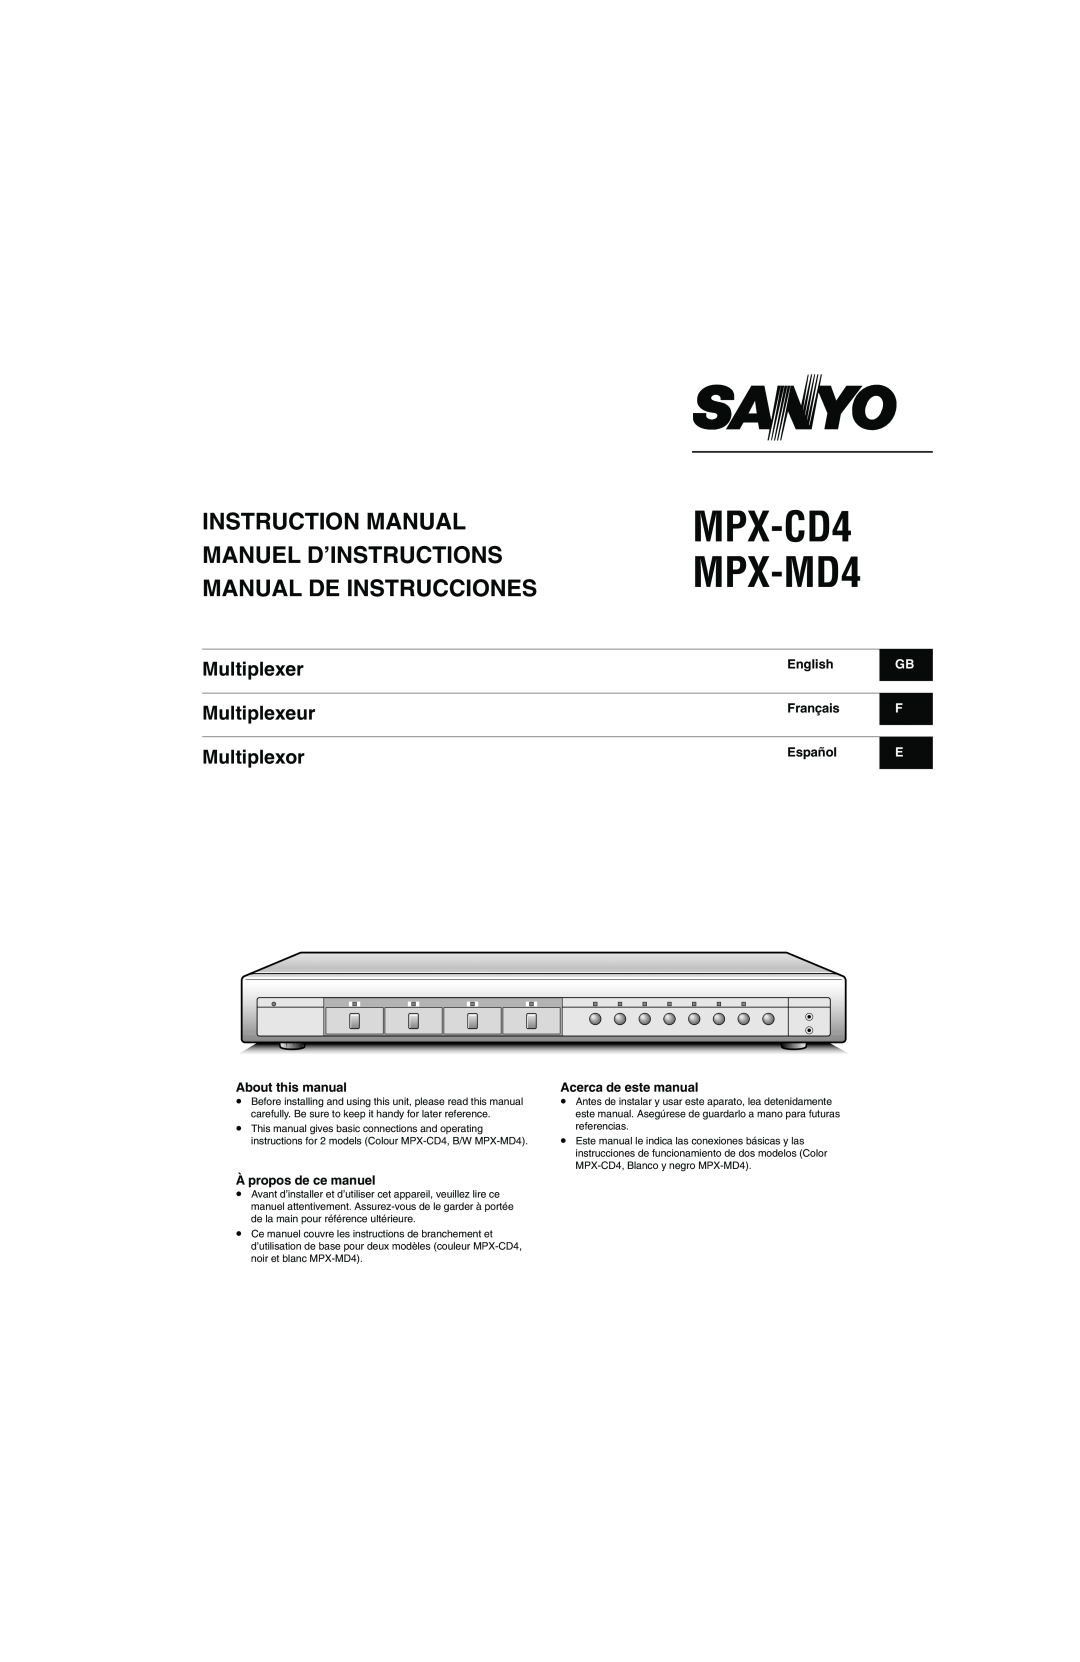 Sanyo instruction manual MPX-CD4 MPX-MD4, Manual De Instrucciones, Multiplexer Multiplexeur Multiplexor 